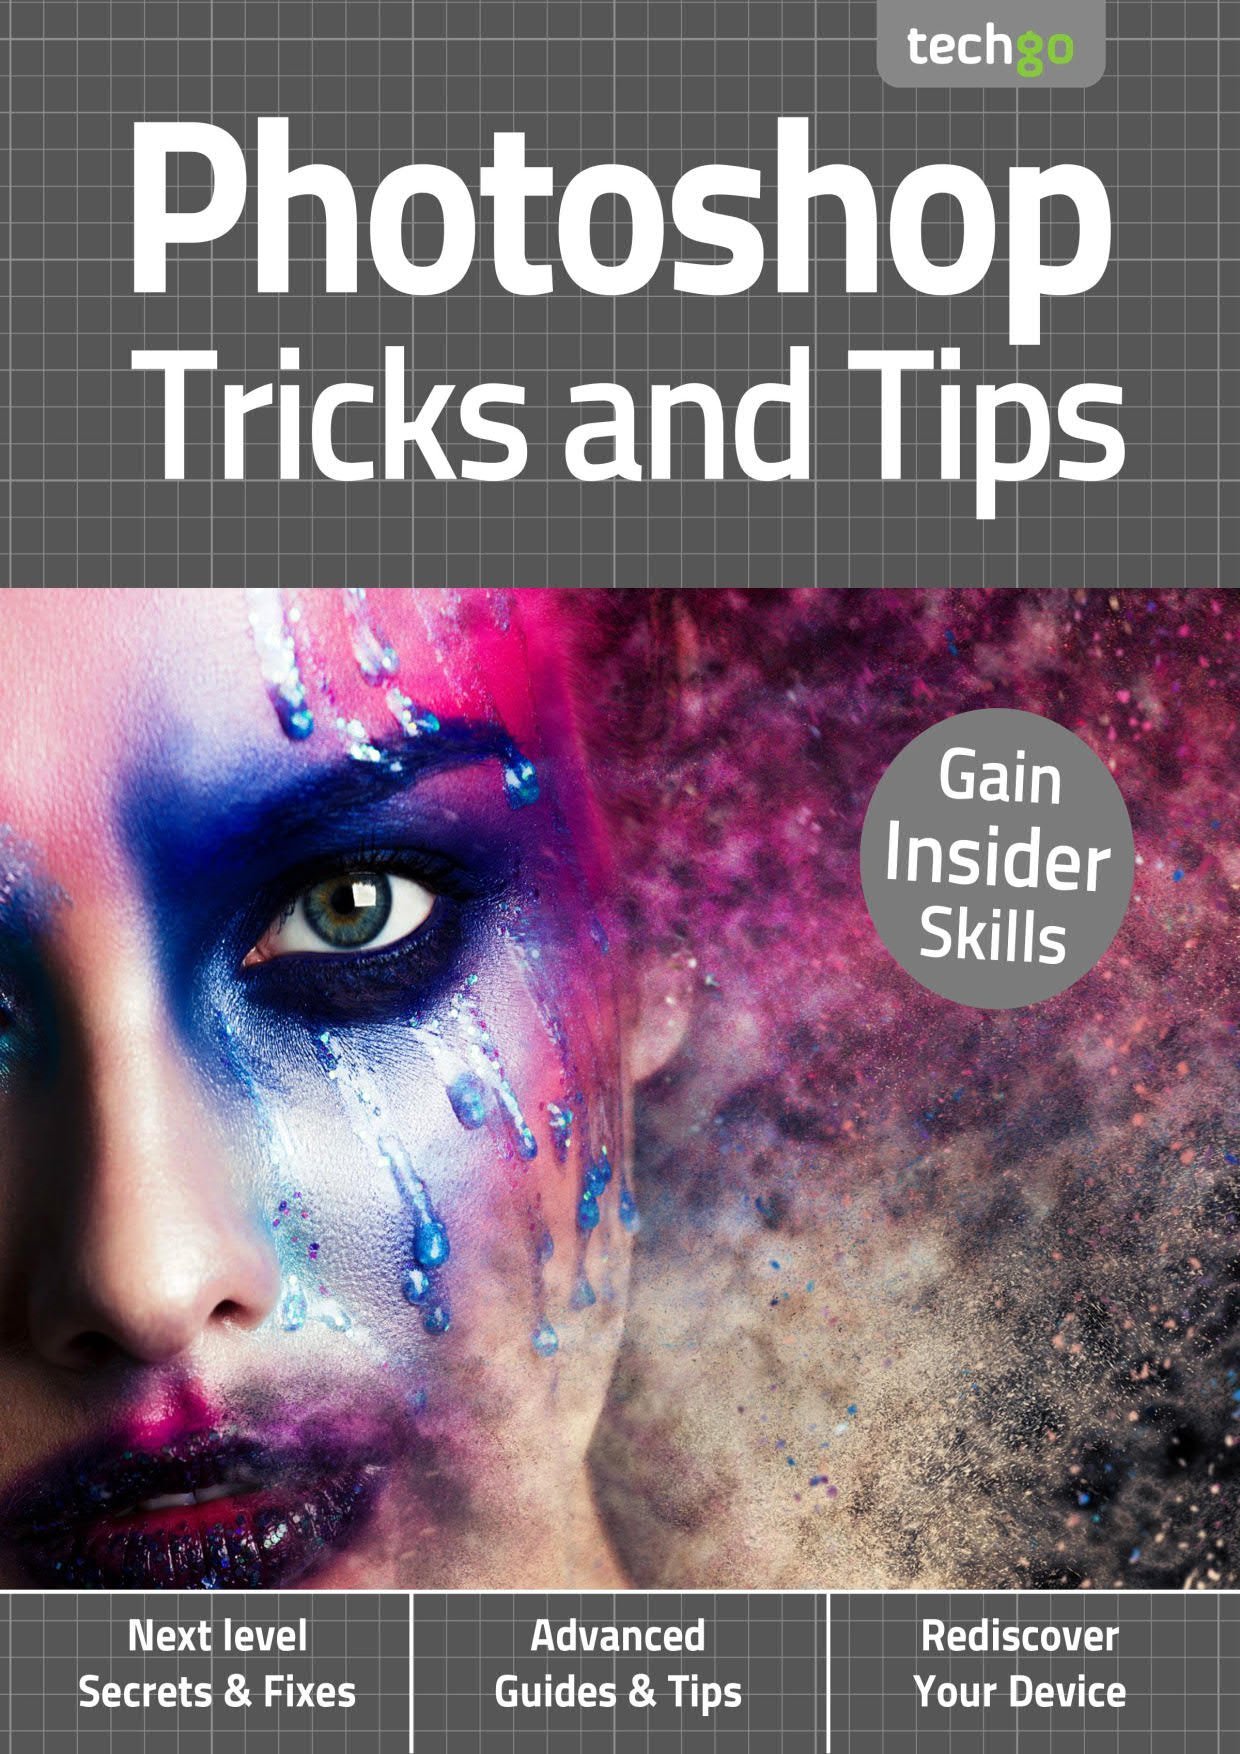 1000 photoshop tricks pdf free download